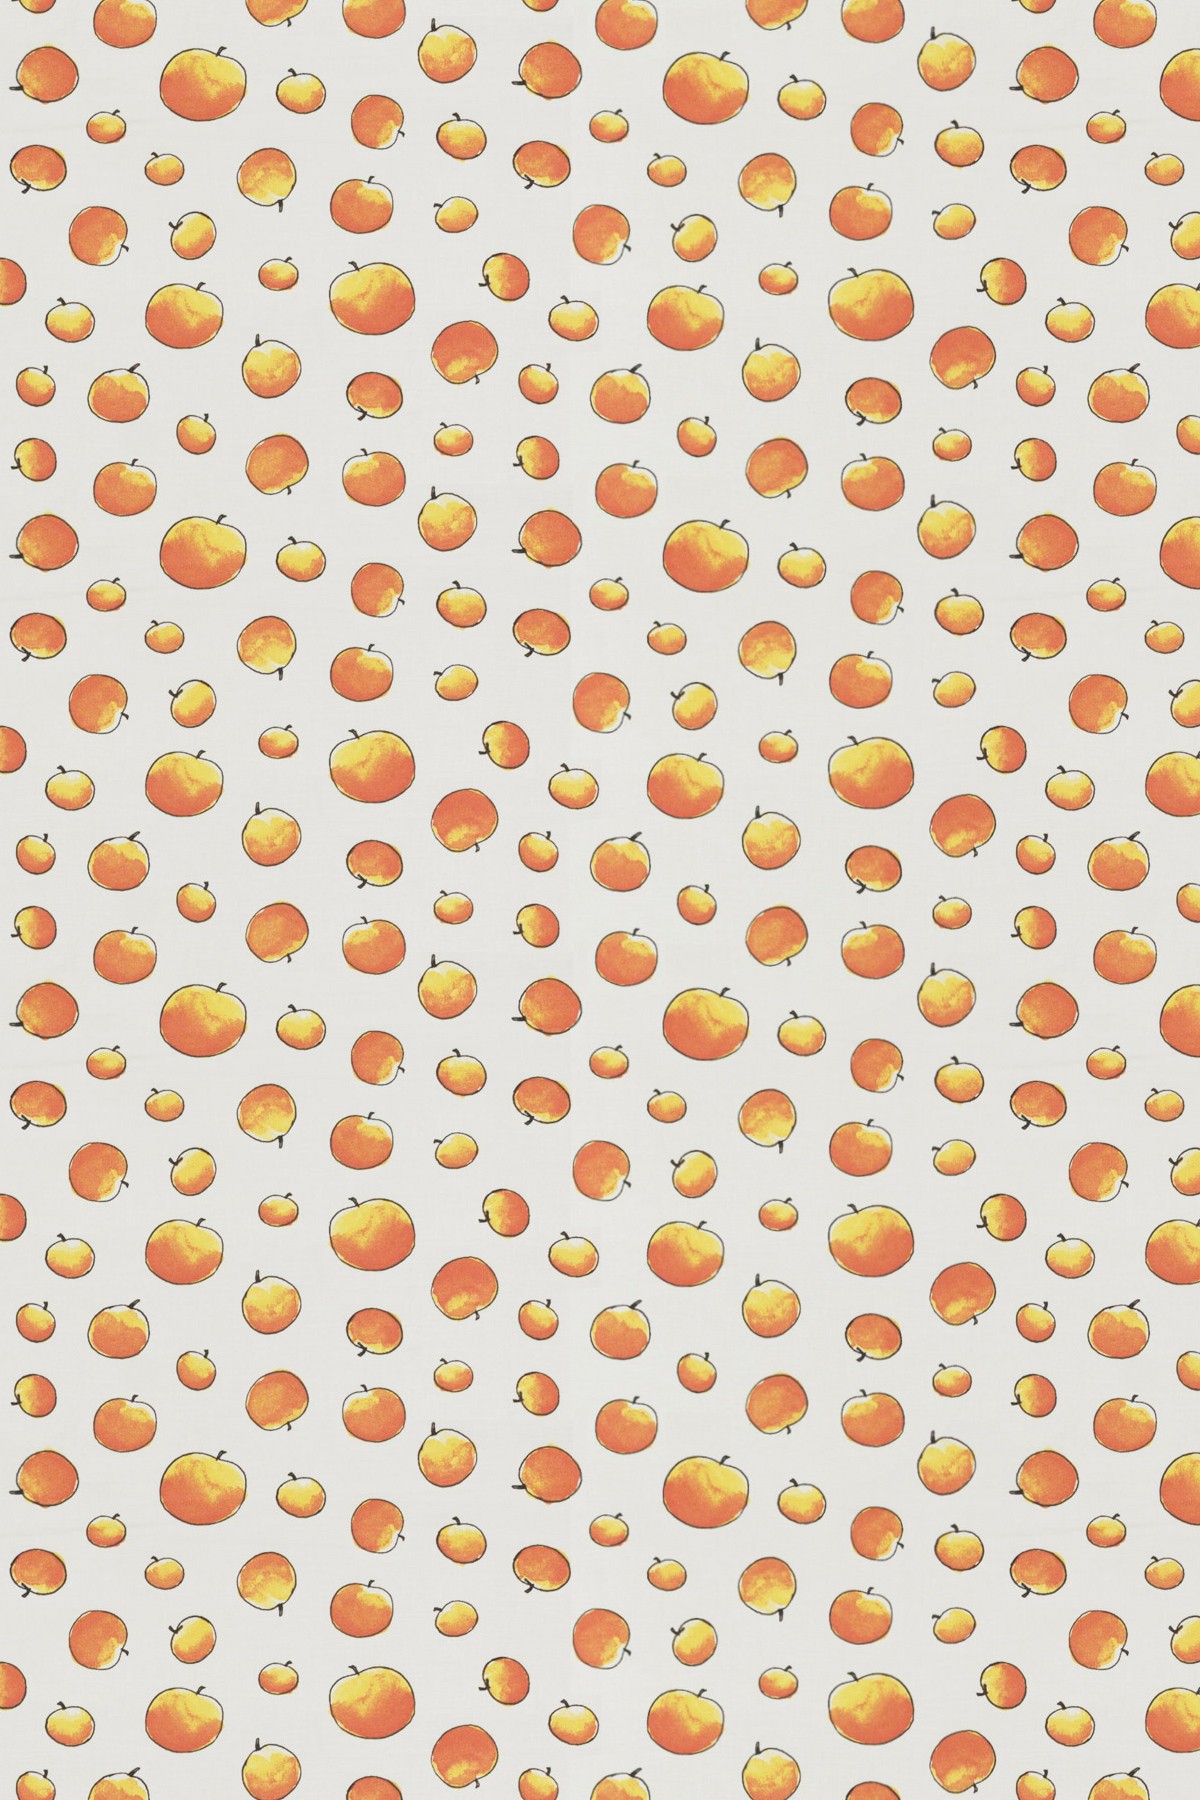 Giant Peach By Roald Dahl Wallpaper Direct